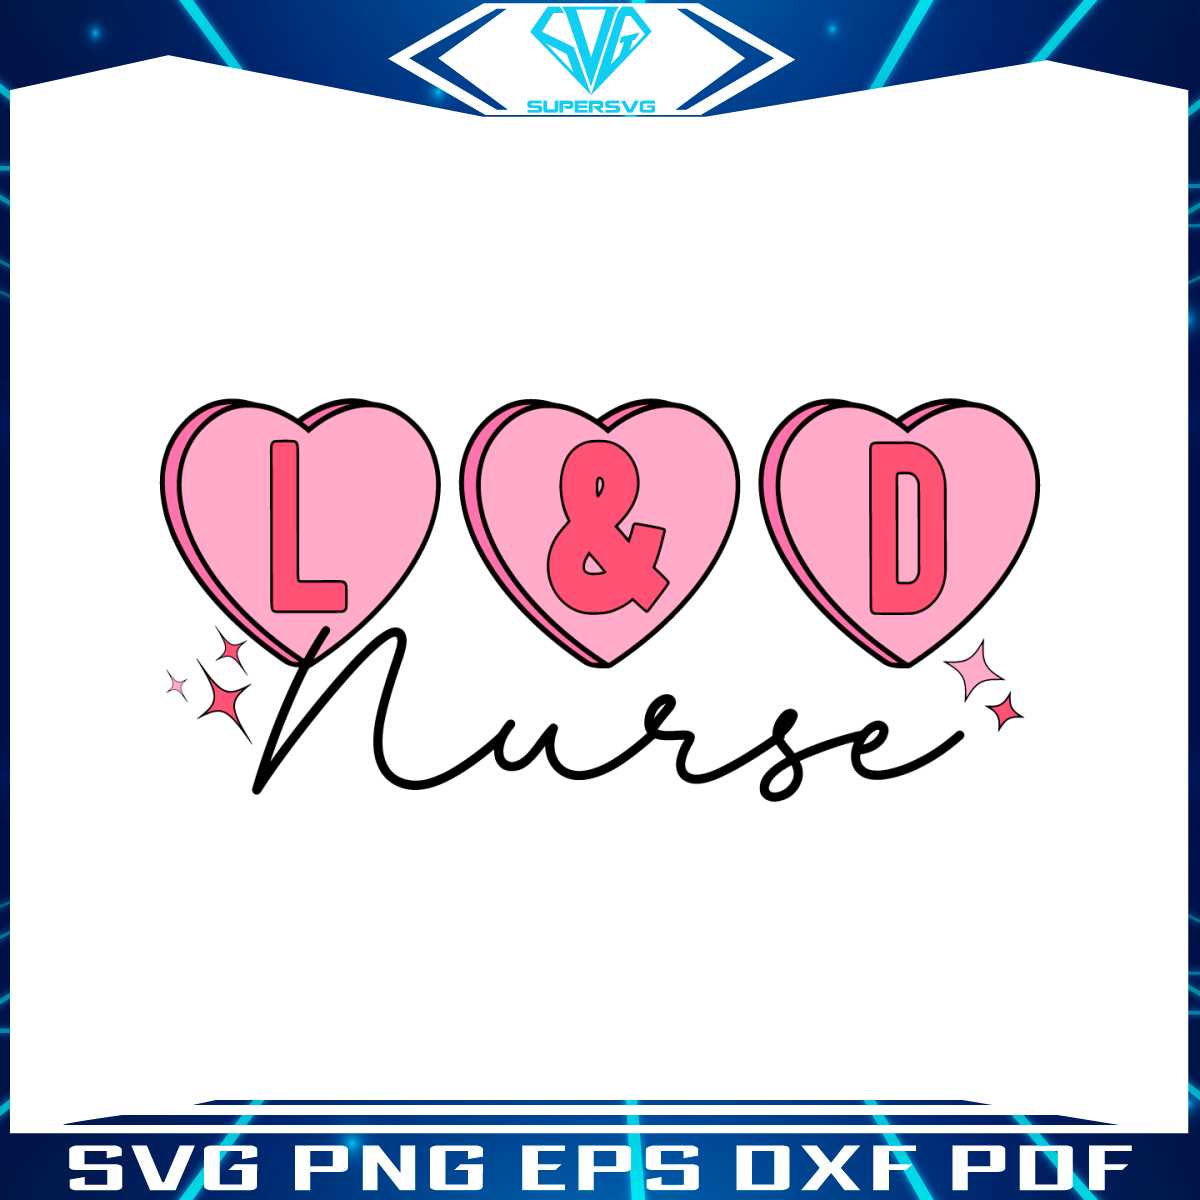 labor-and-delivery-nurse-valentine-svg